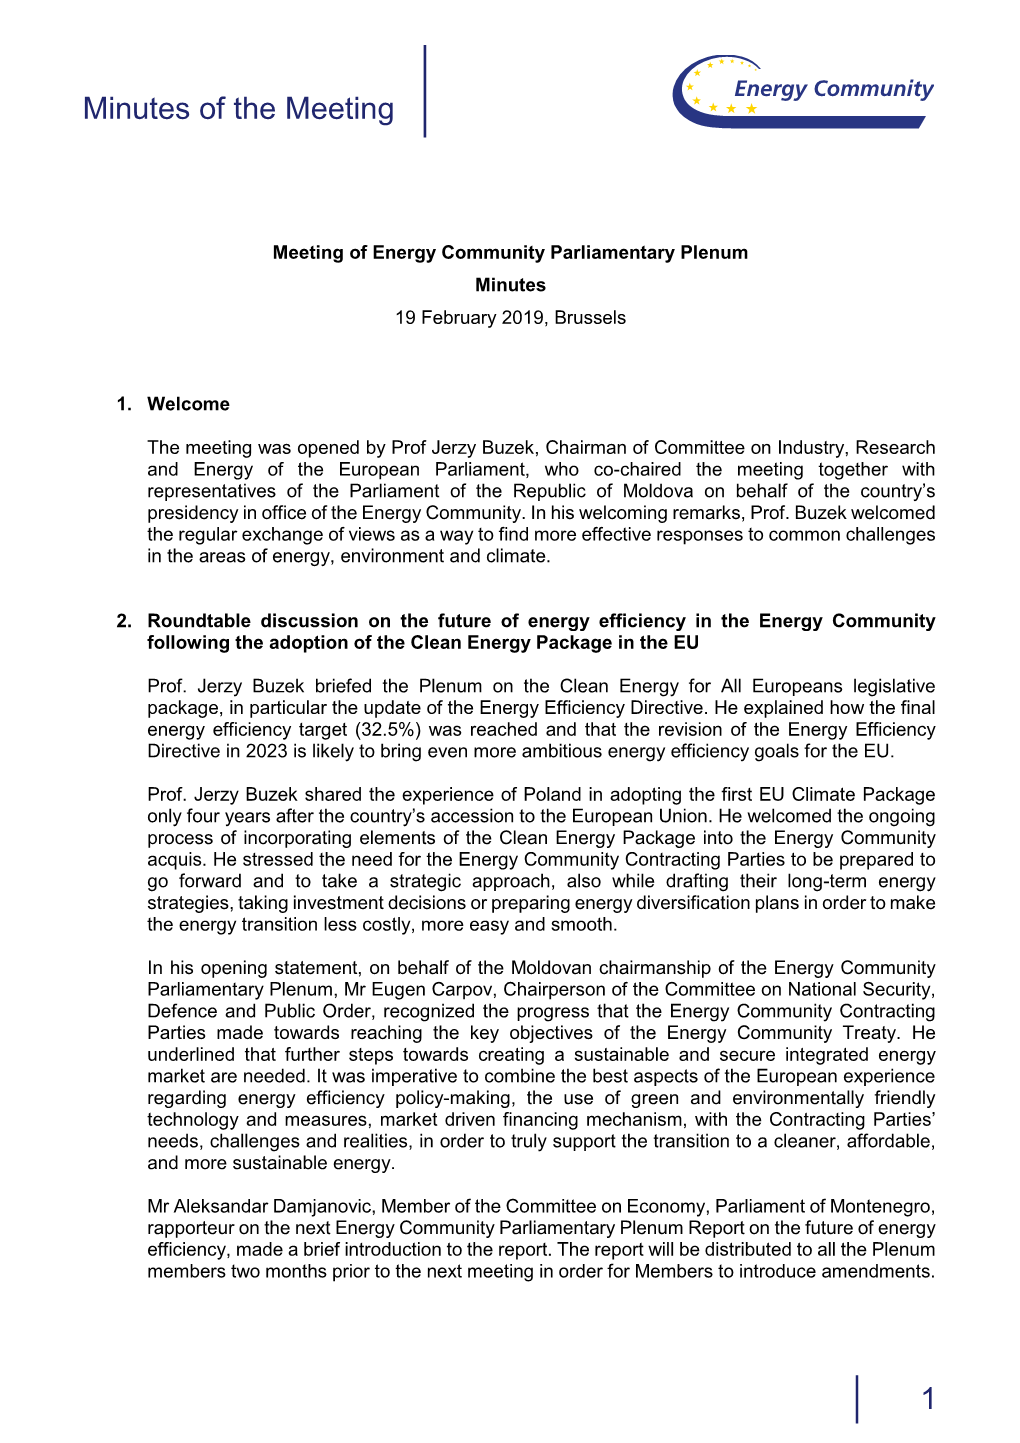 Minutes of Meeting of Energy Community Parliamentary Plenum